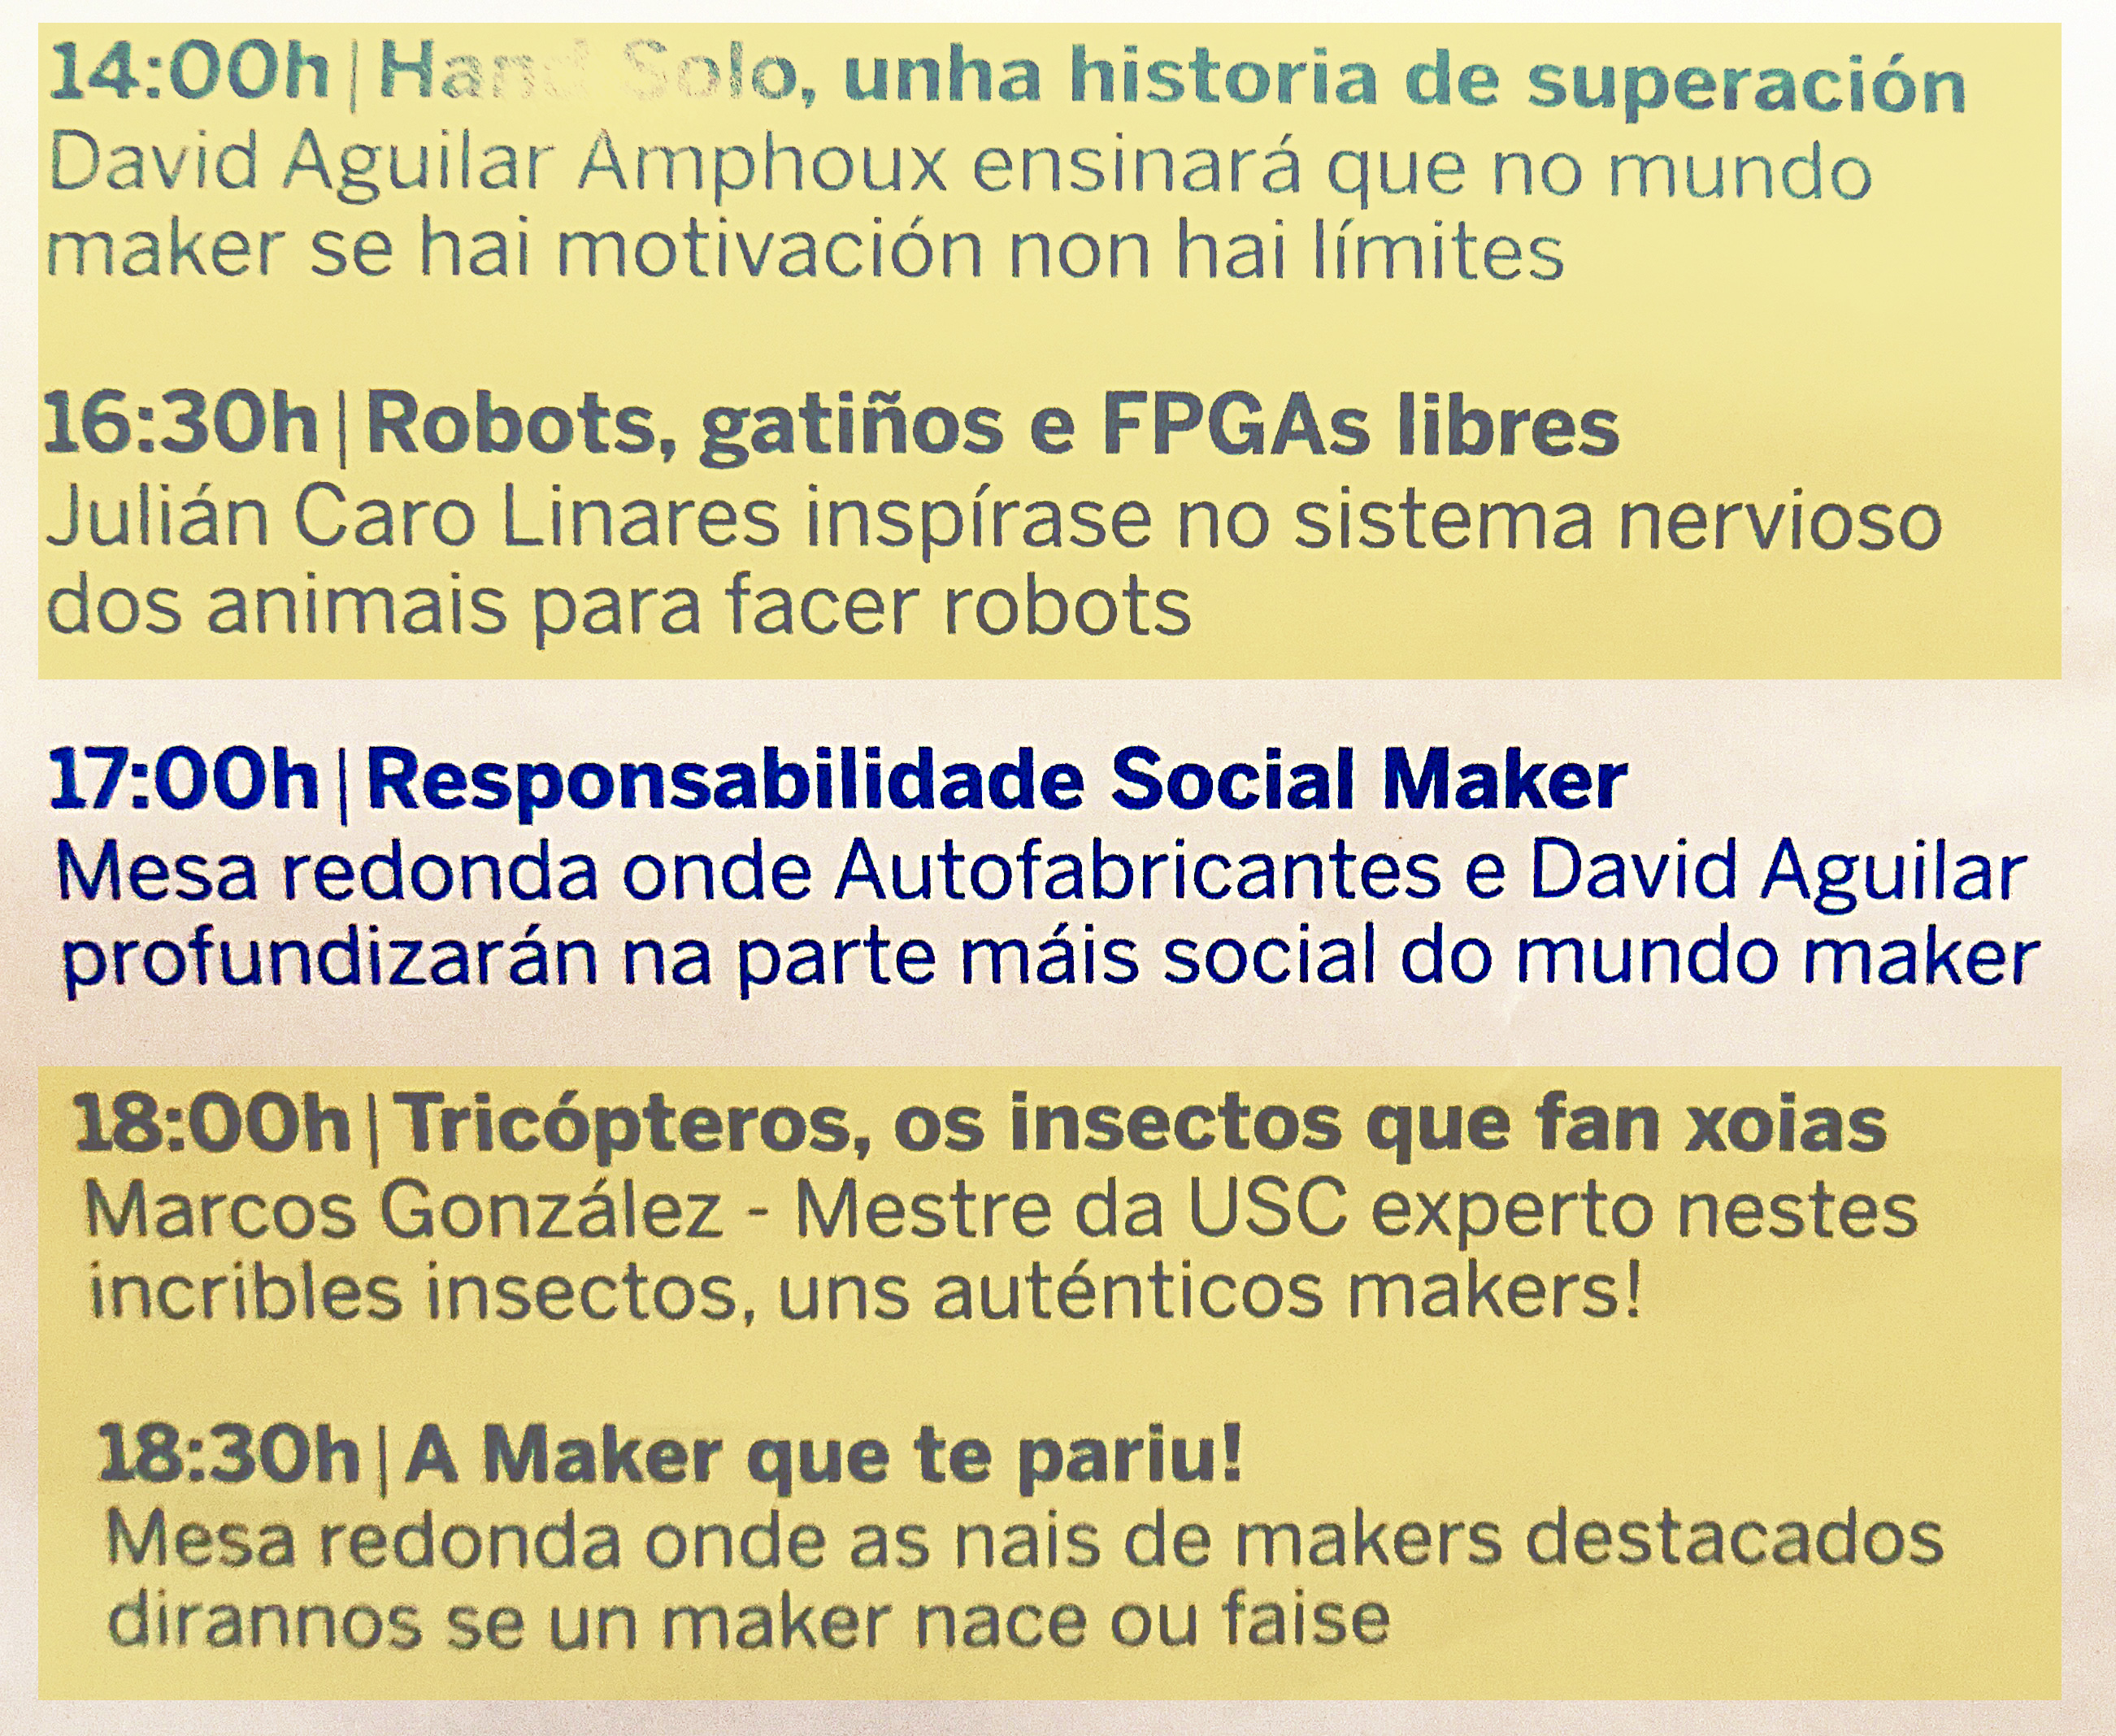 Autofabricantes en Maker Faire Galicia